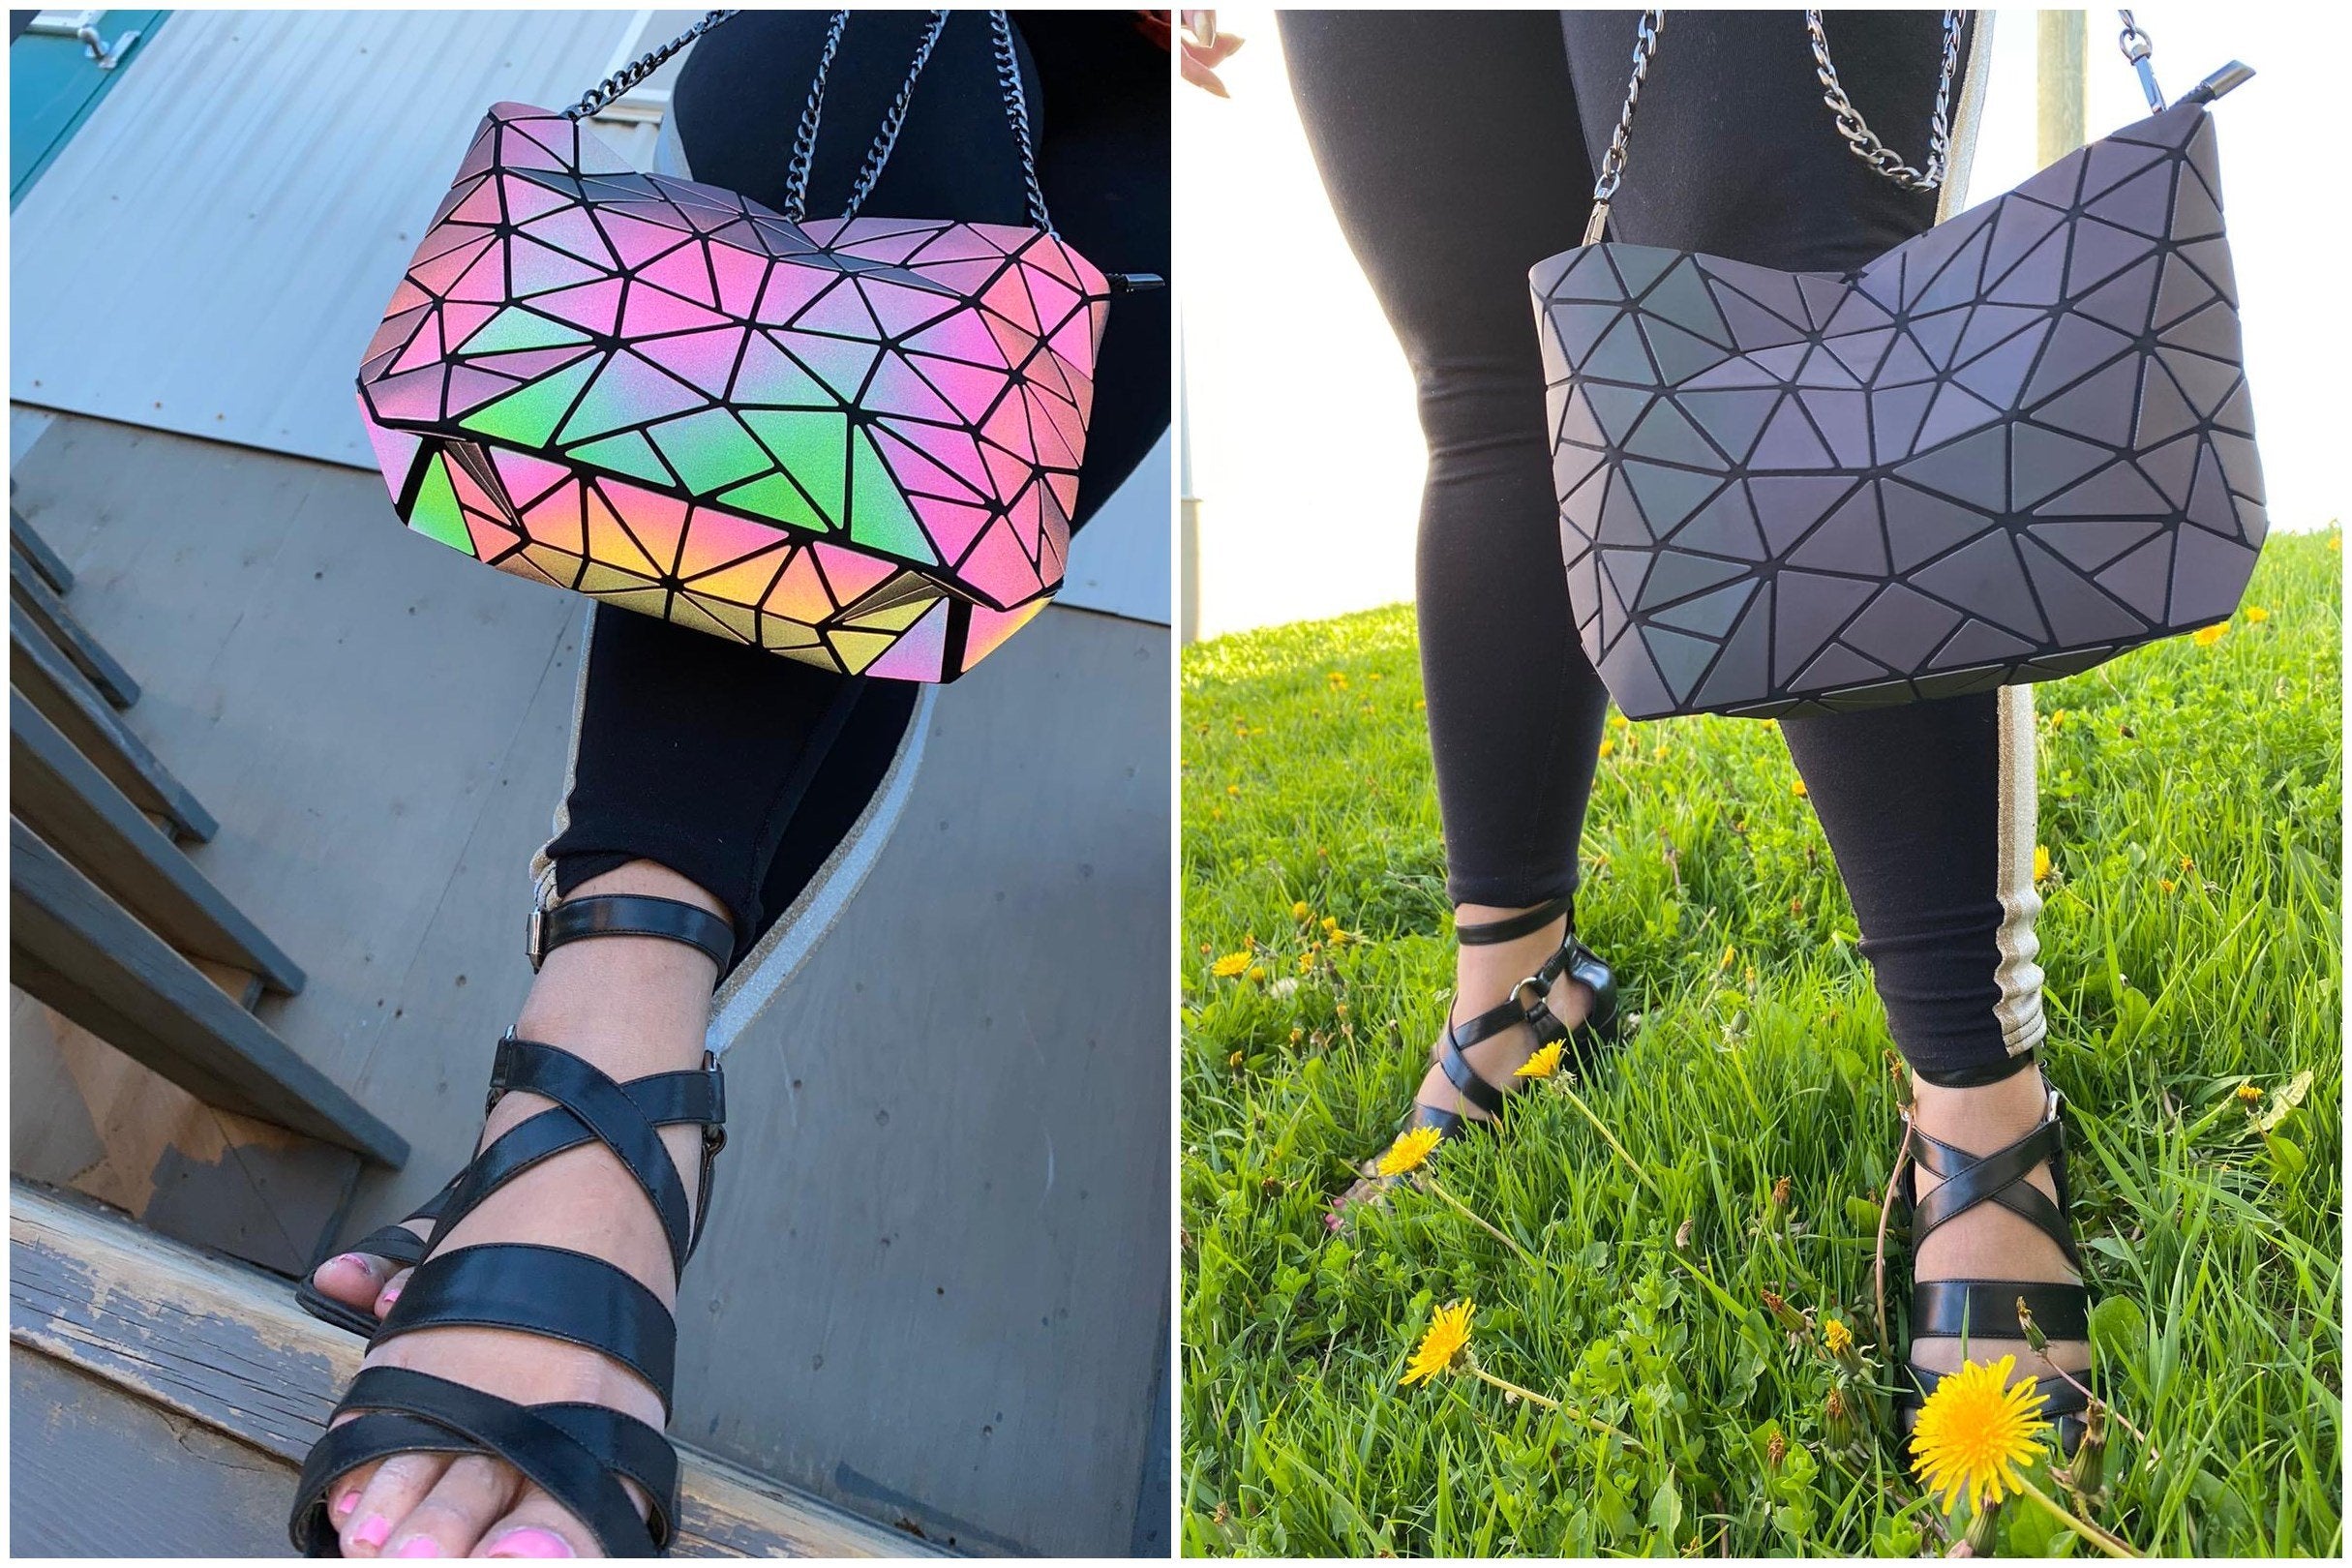 Geometric Luminous Purses And Handbags For Women Holographic Reflectiv –  its-unique buy